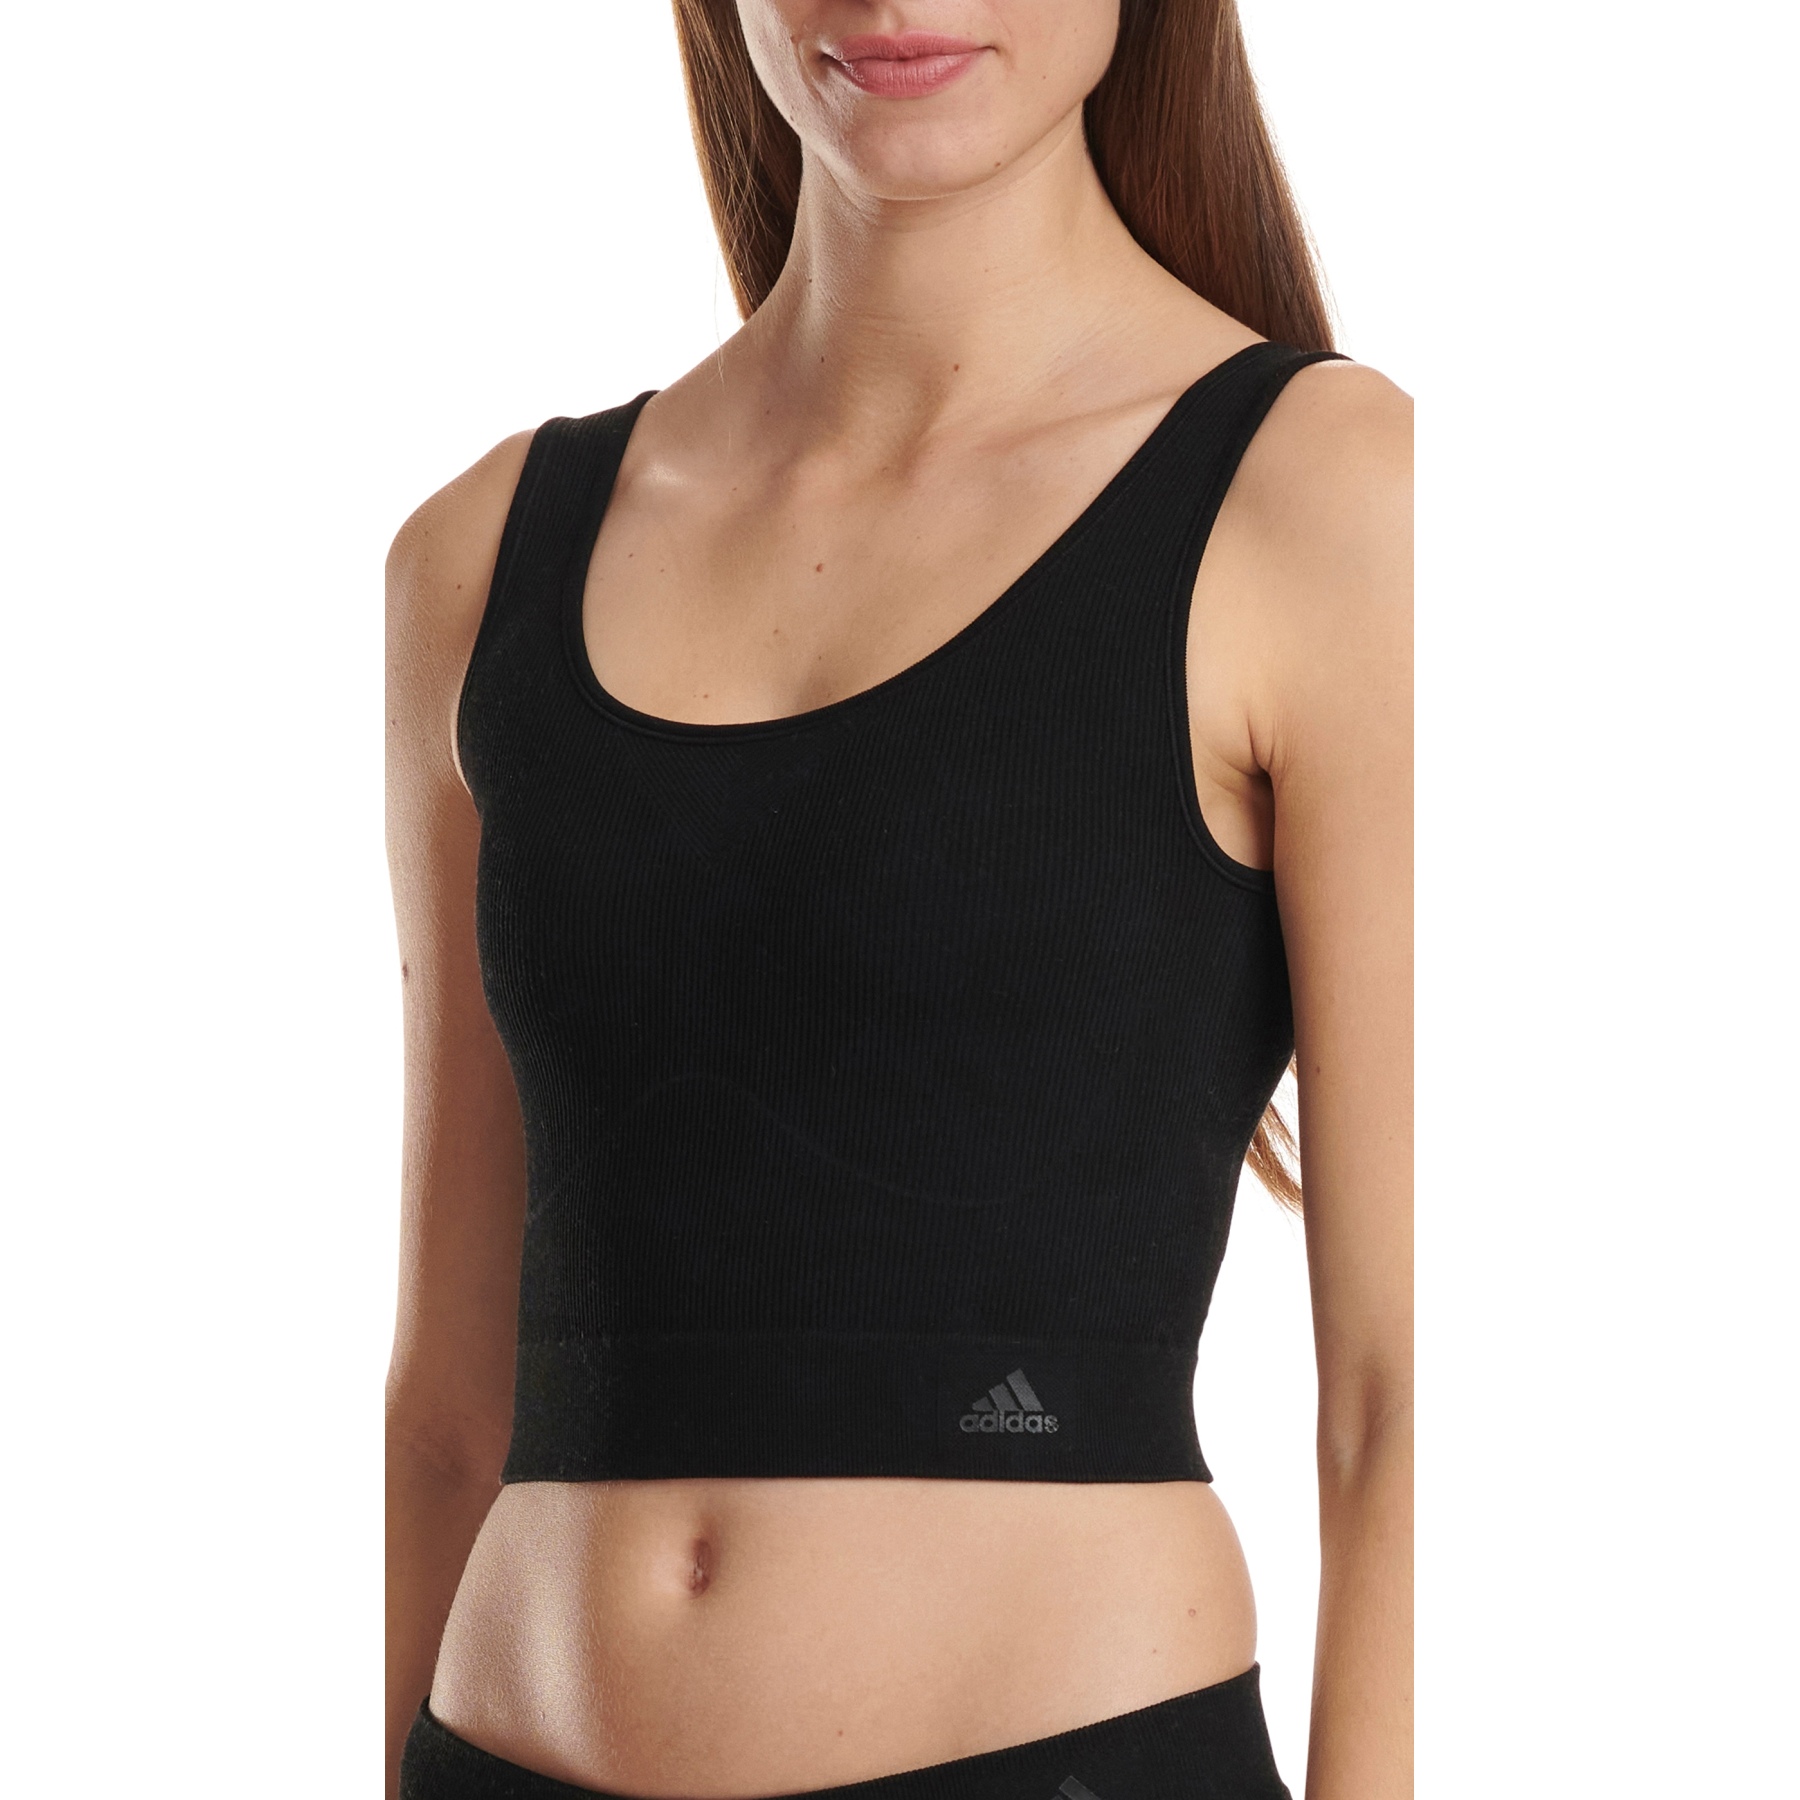 https://images.bike24.com/i/mb/dd/33/56/adidas-sports-underwear-3d-rib-womens-cropped-top-000-black-6-1513870.jpg